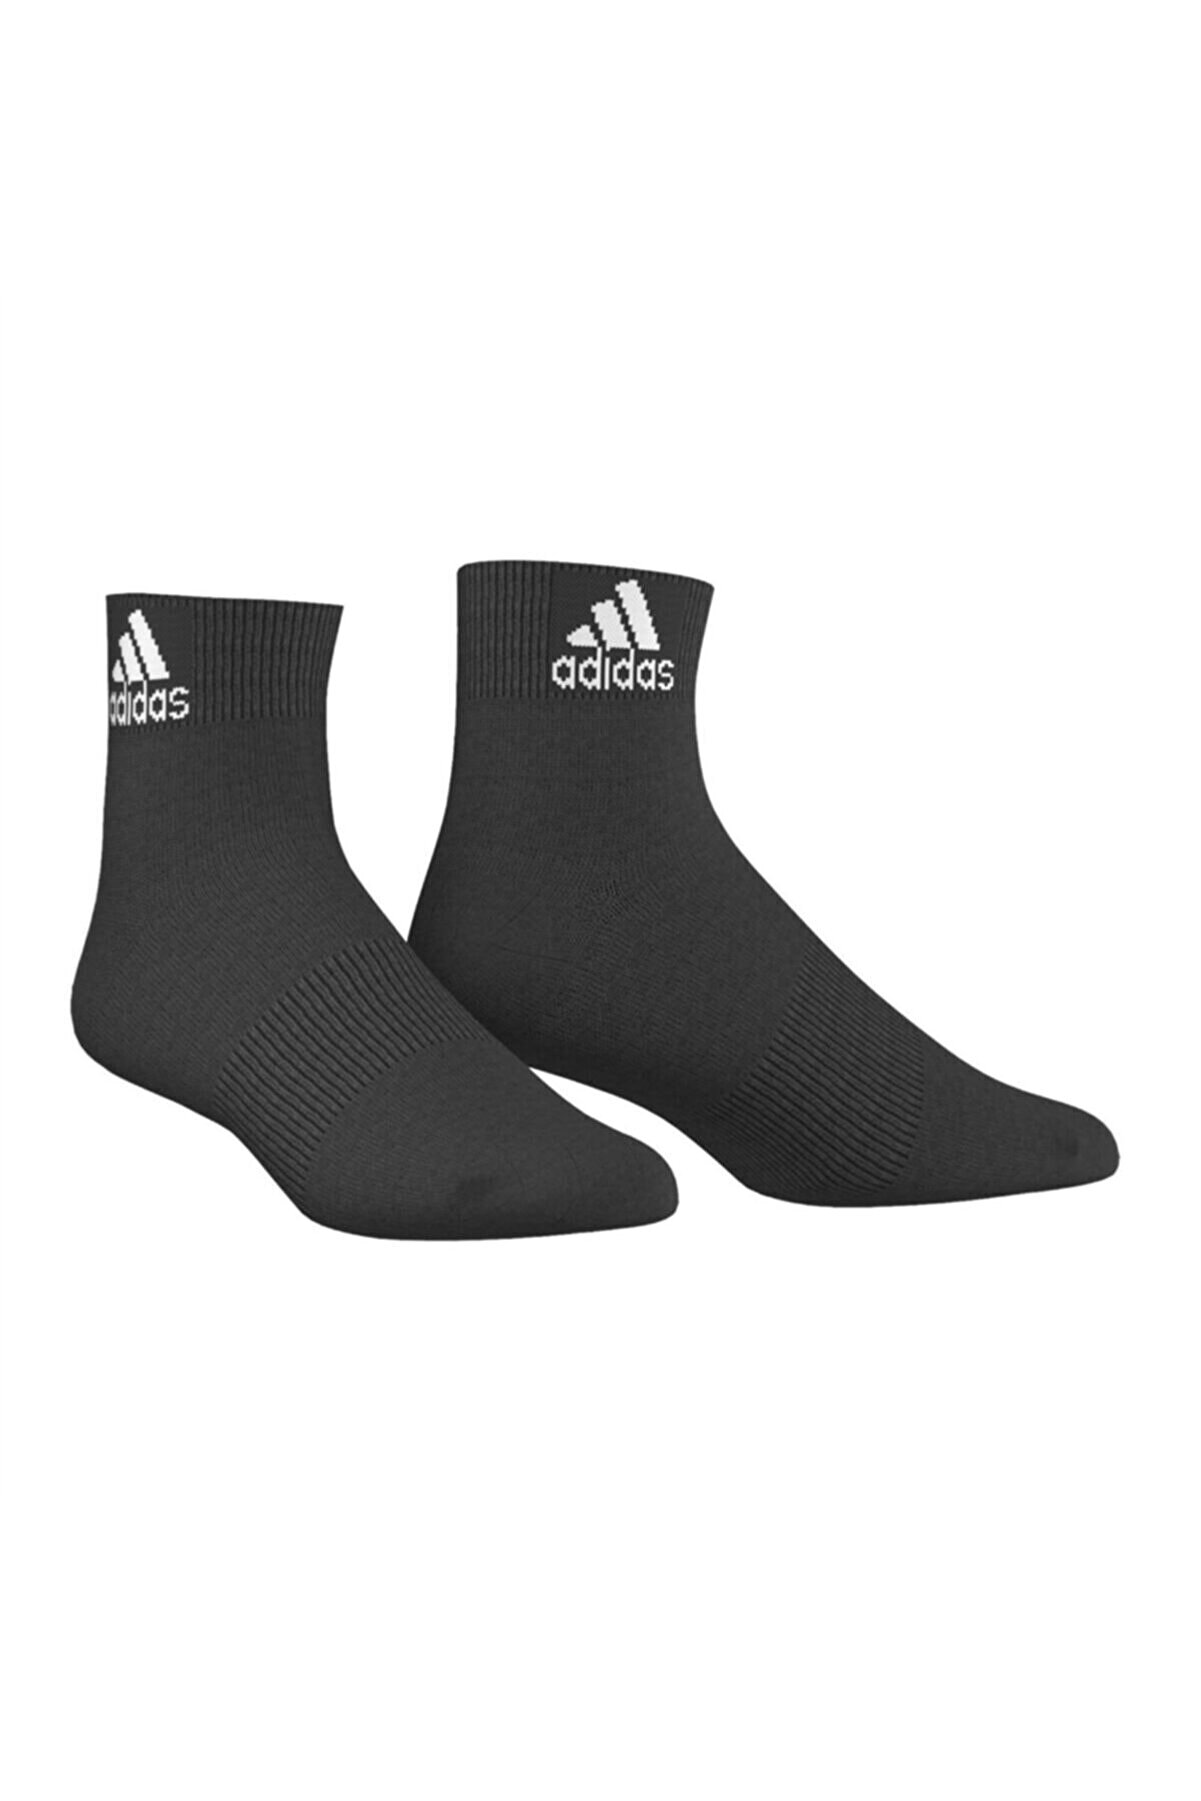 adidas Unisex Siyah Spor Kısa Çorap (aa2324)